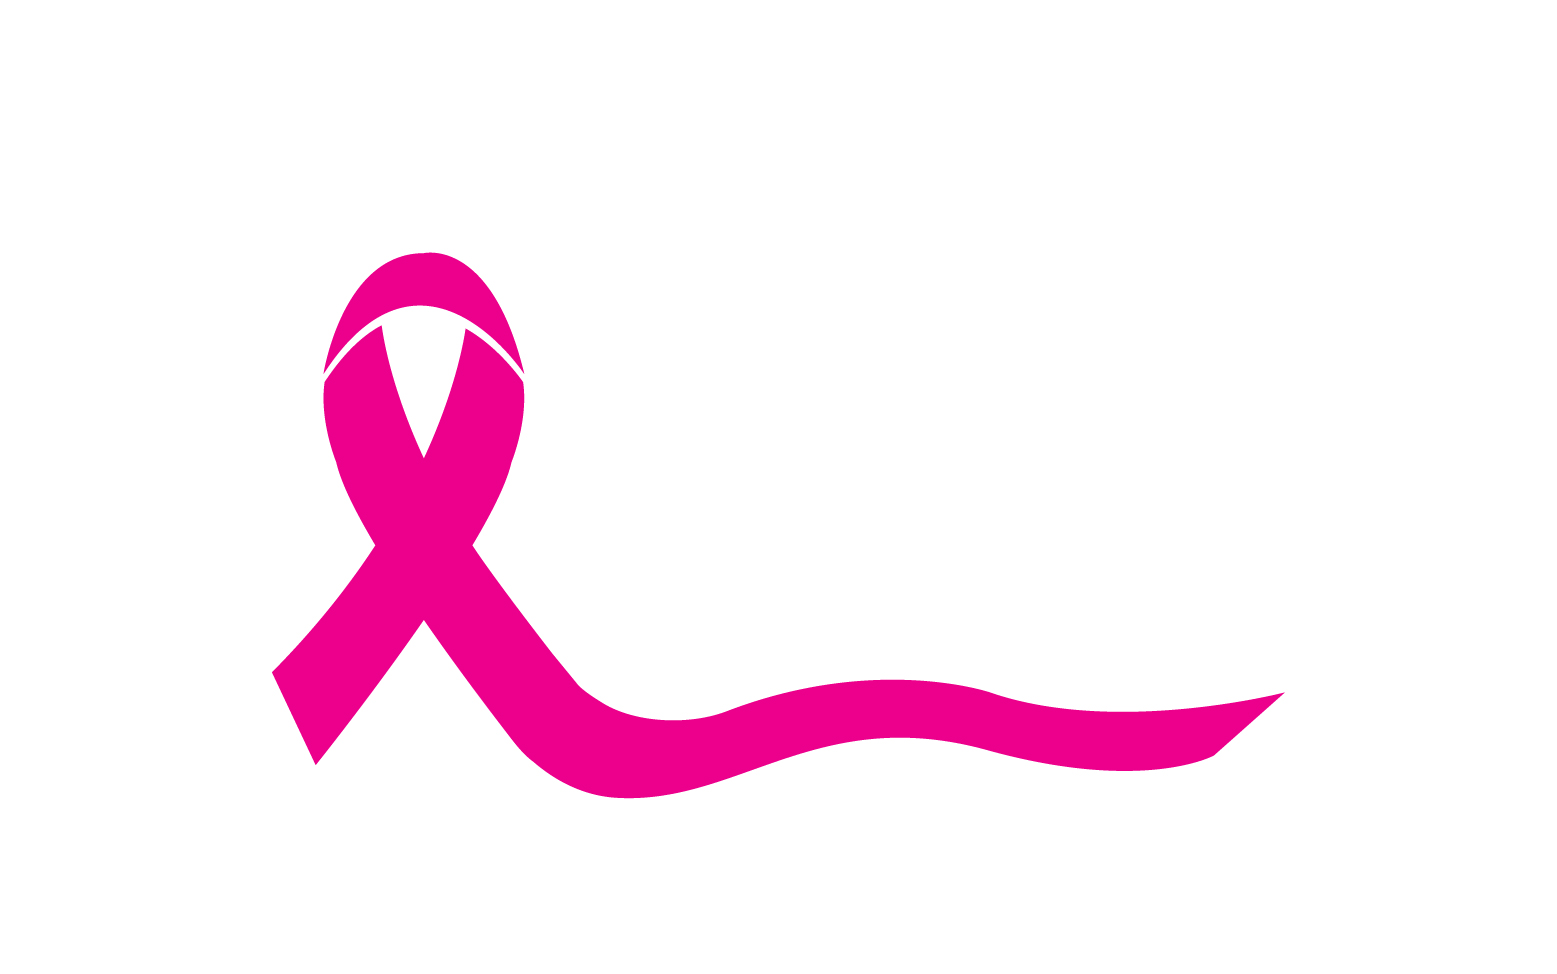 Ribbon pink icon logo element version v50